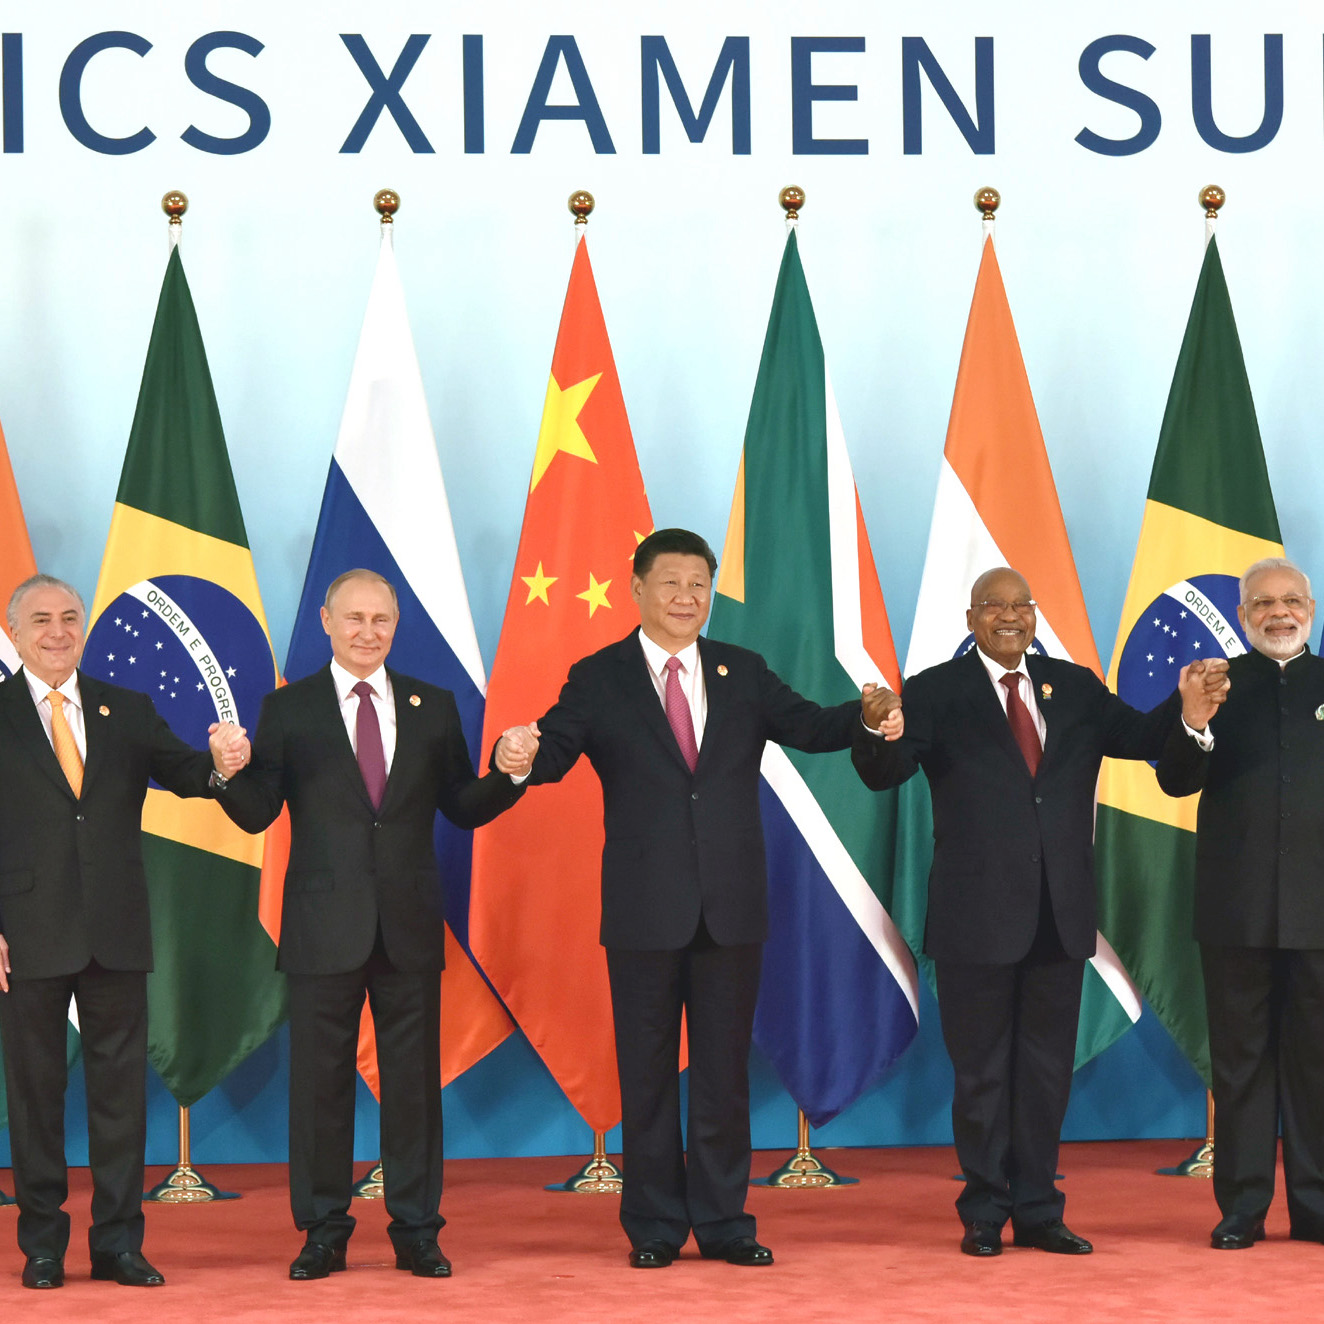 Rising Powers: The BRICS